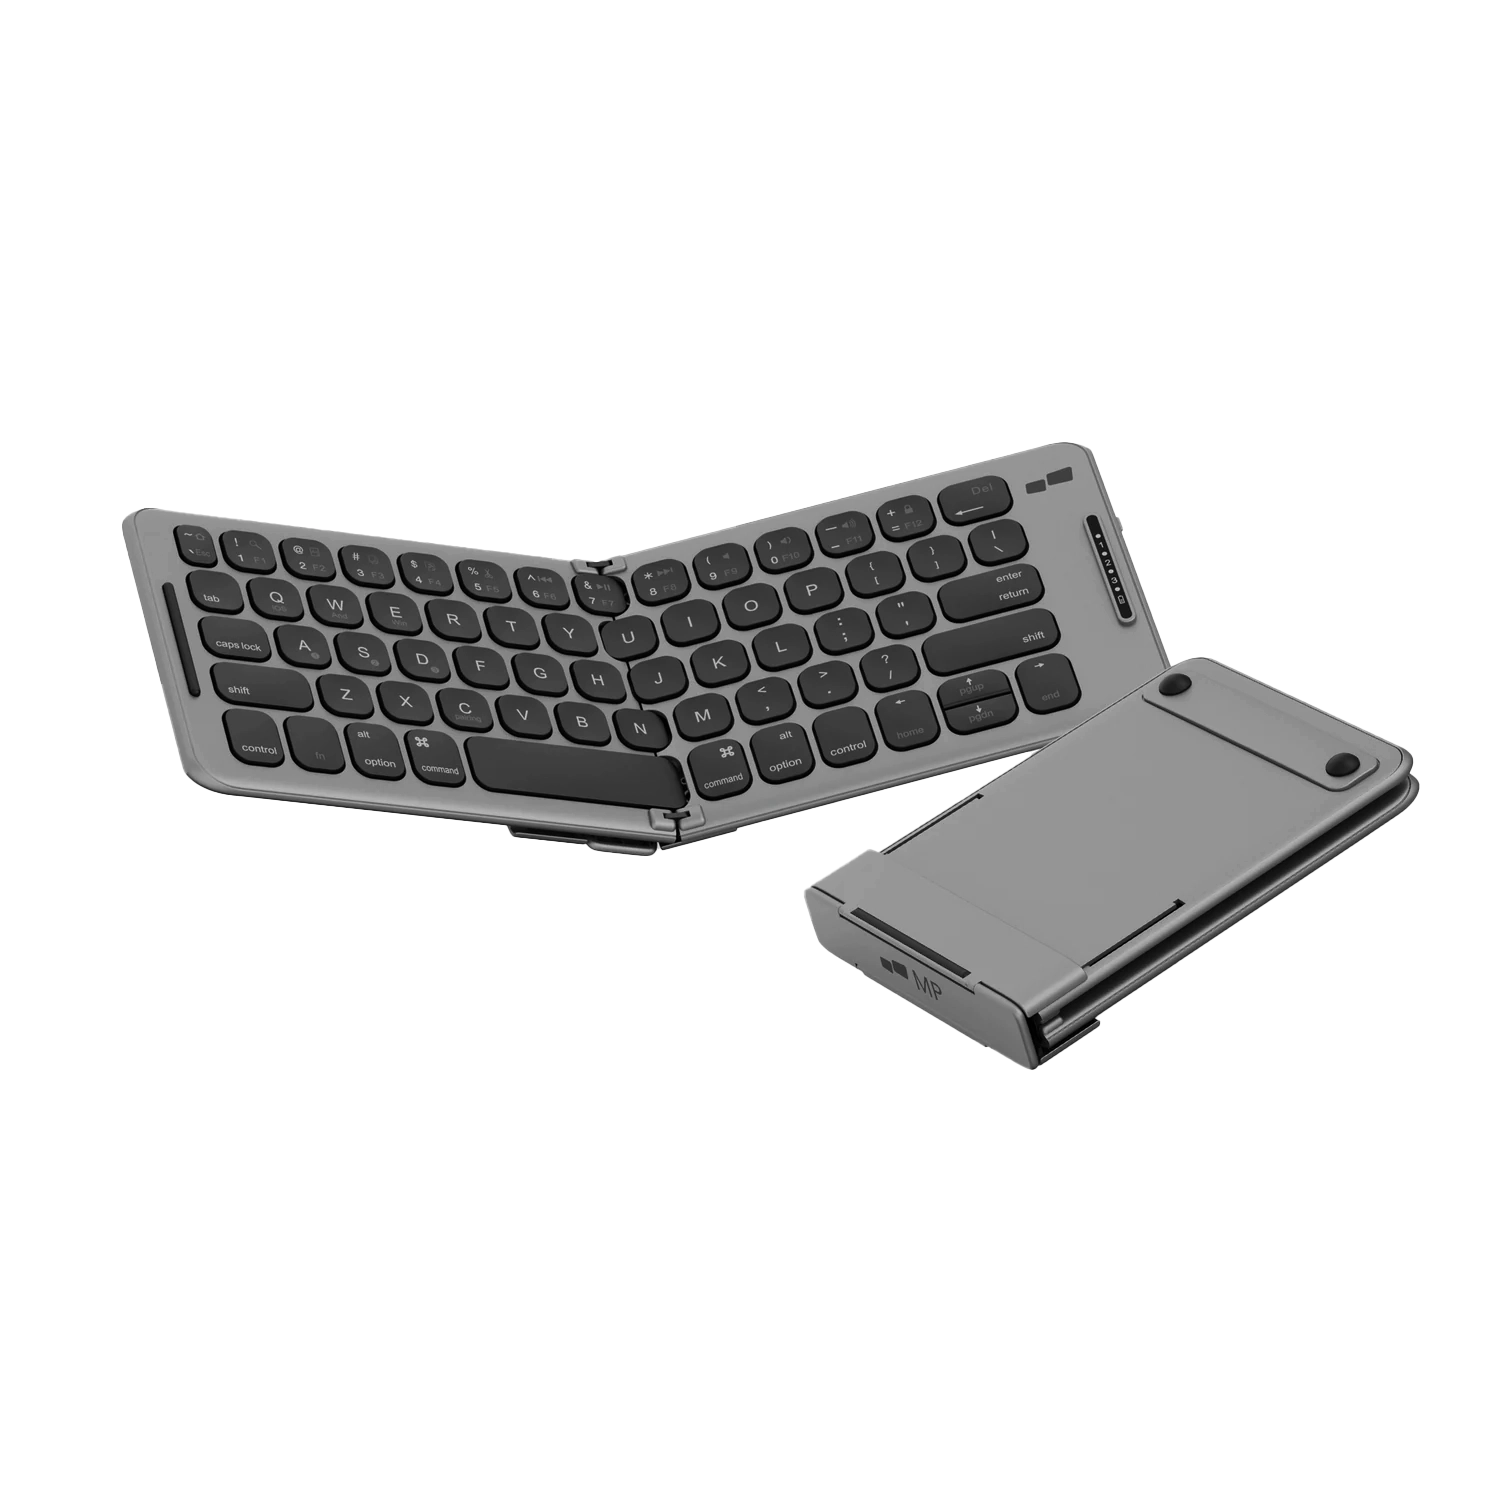 Mobile pixels Keyboard (109-1001p01)